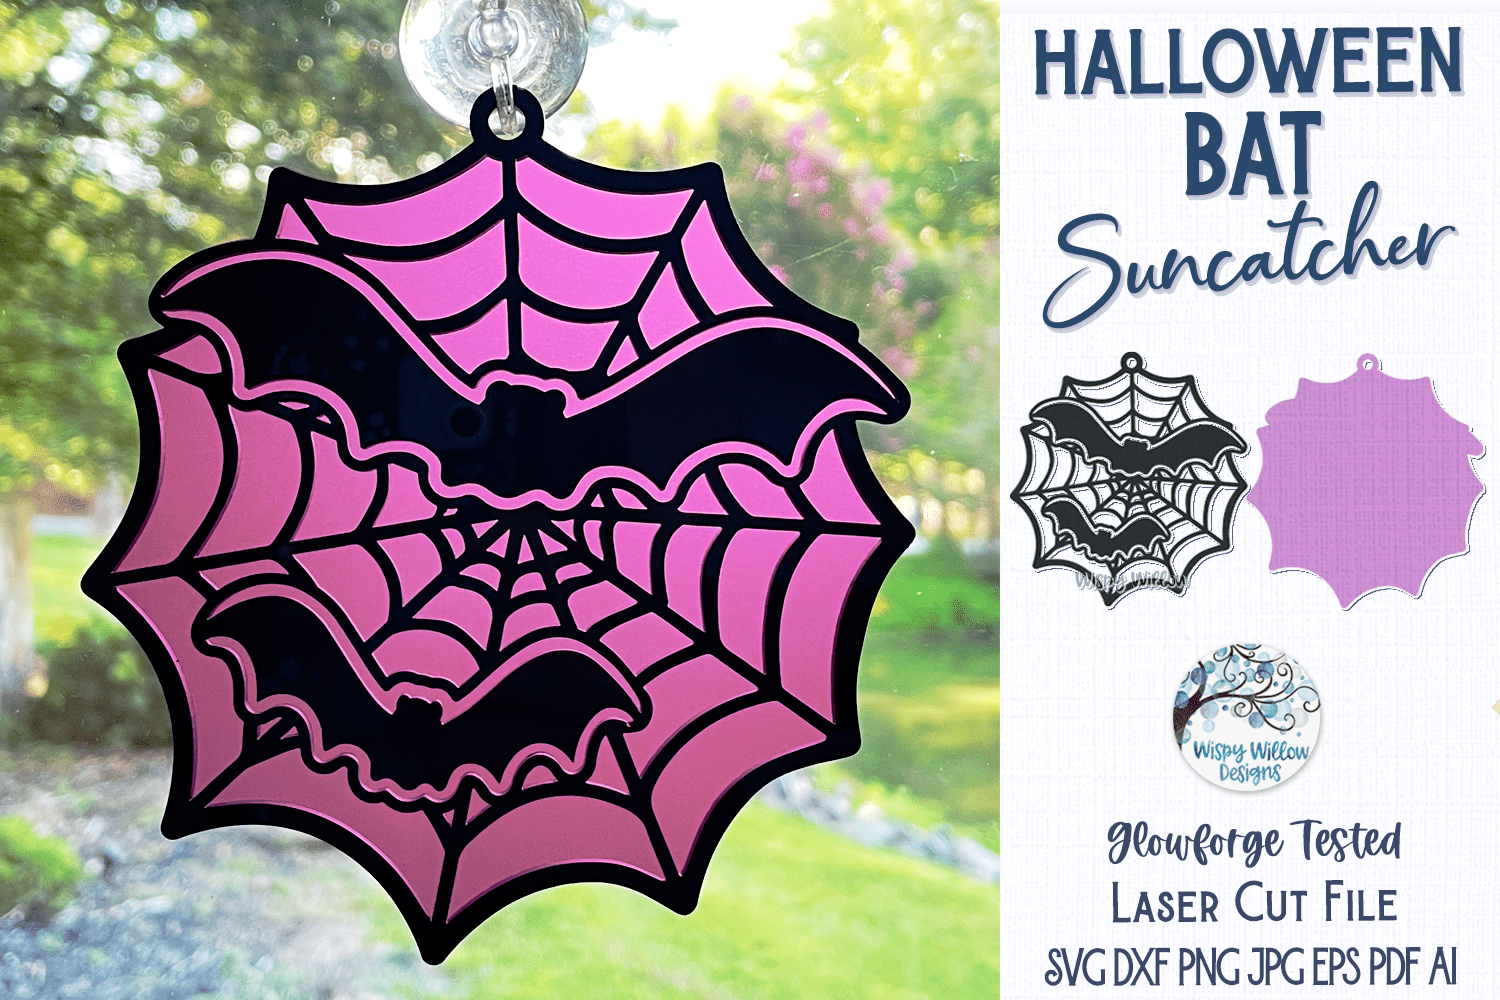 Halloween Bat Suncatcher for Glowforge Laser Cutter Wispy Willow Designs Company